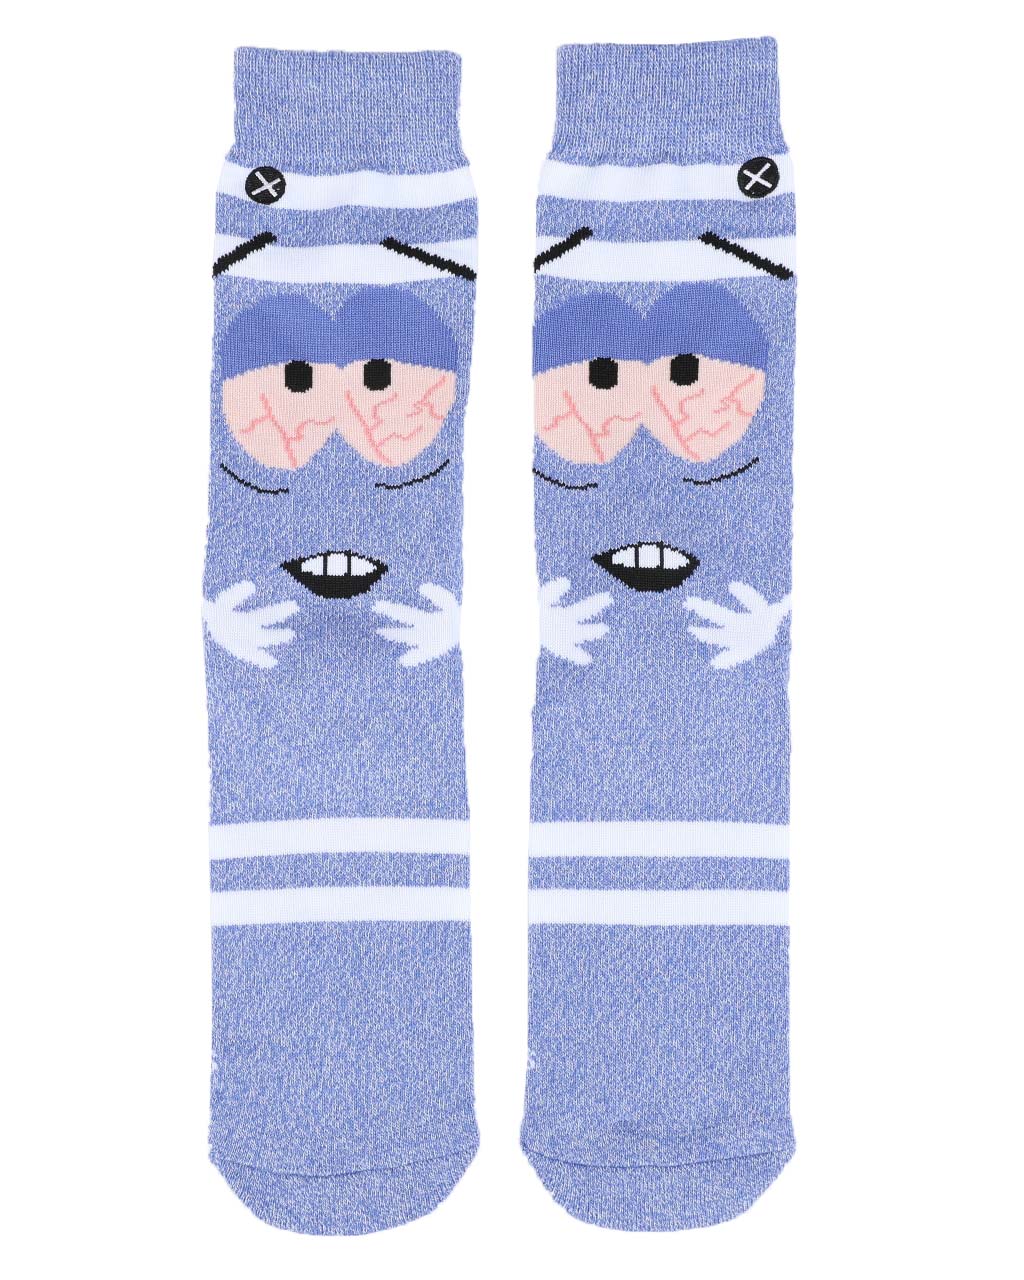 ODD SOX - South Park: Towelie Crew Socks | Women's - Knock Your Socks Off